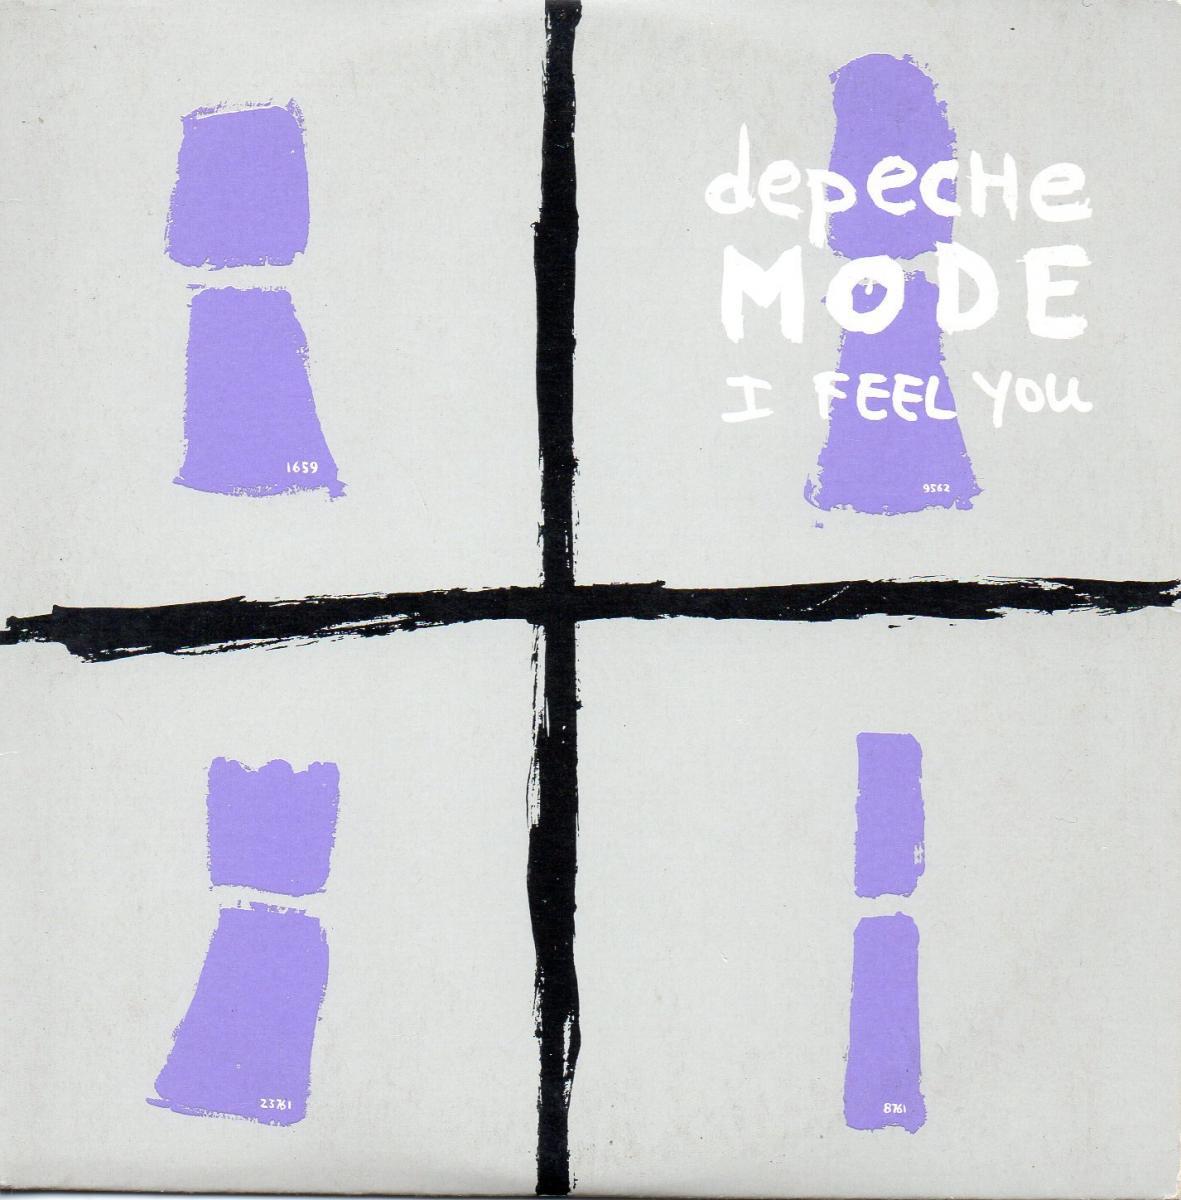 Depeche Mode: I Feel You (Music Video)